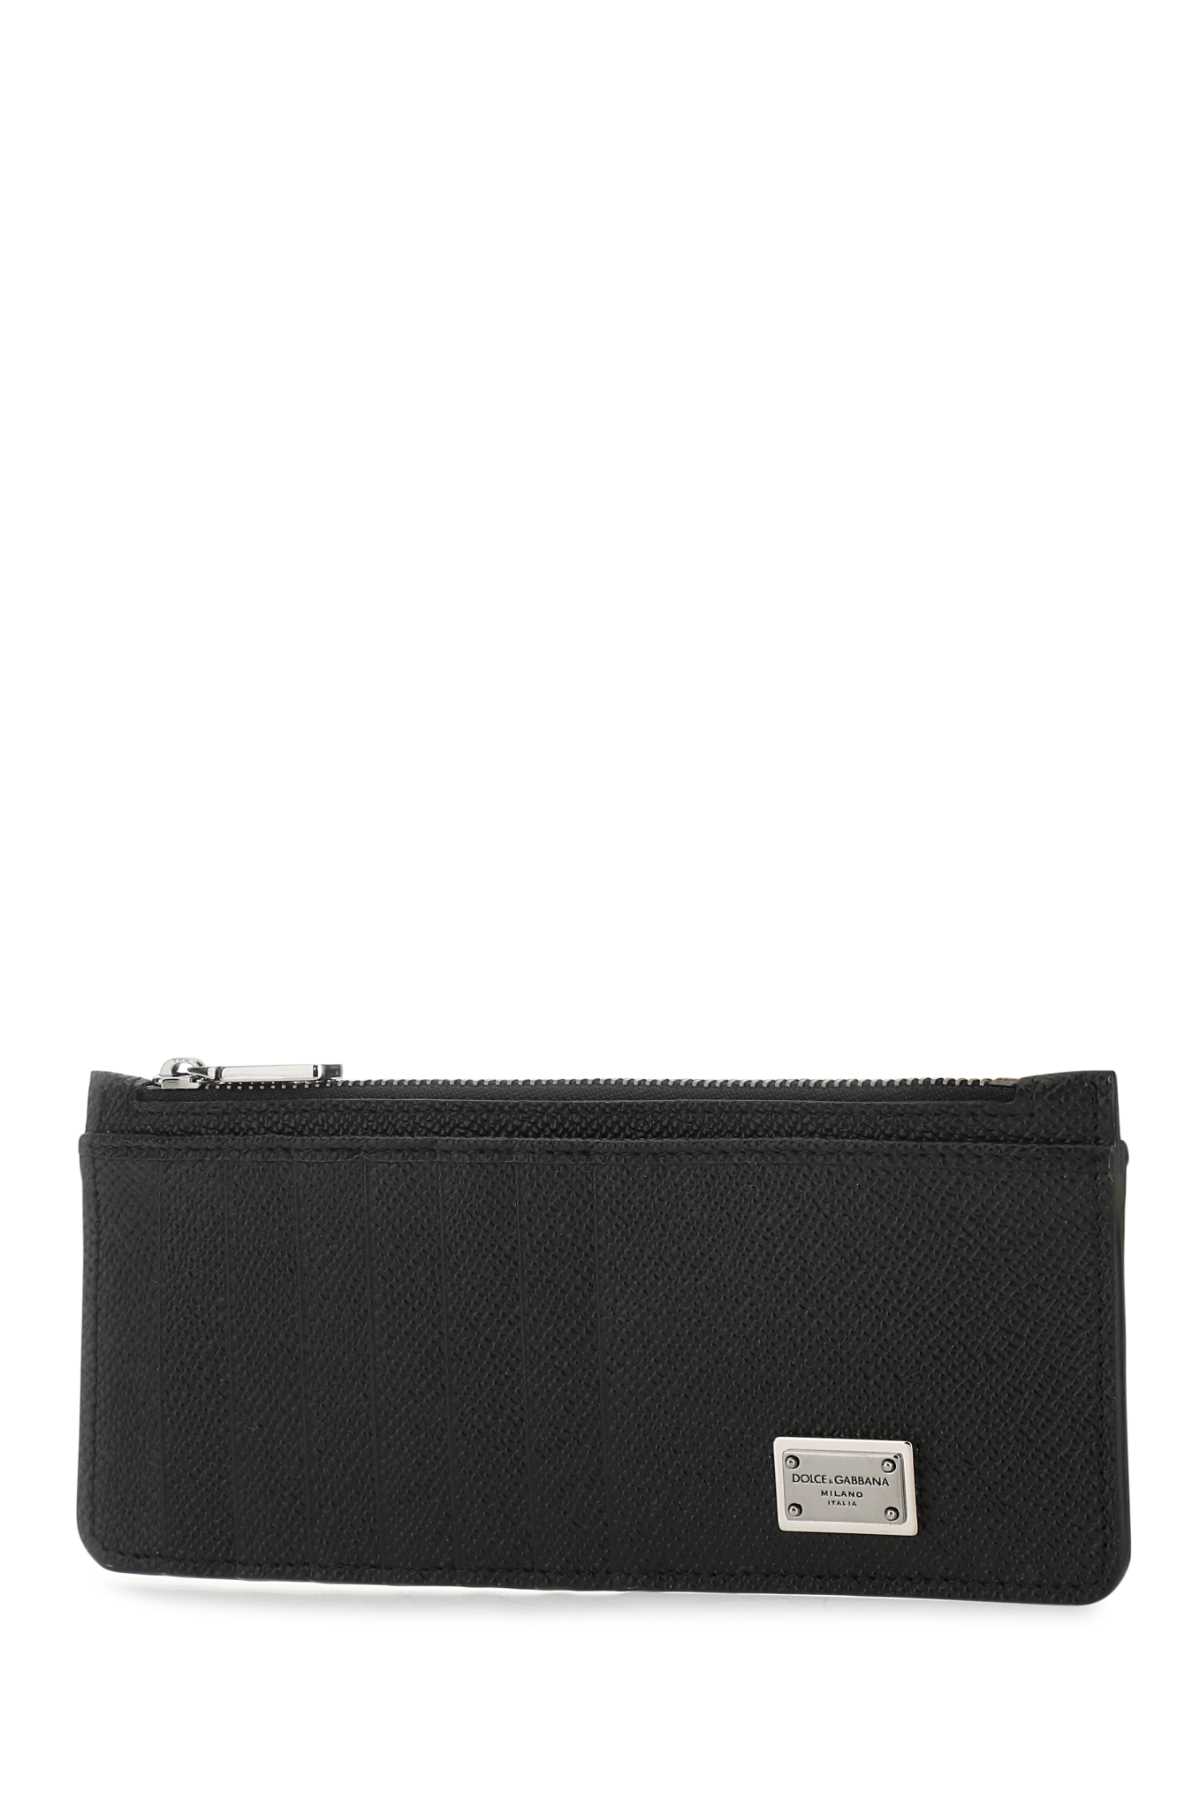 Shop Dolce & Gabbana Black Leather Card Holder In 80999